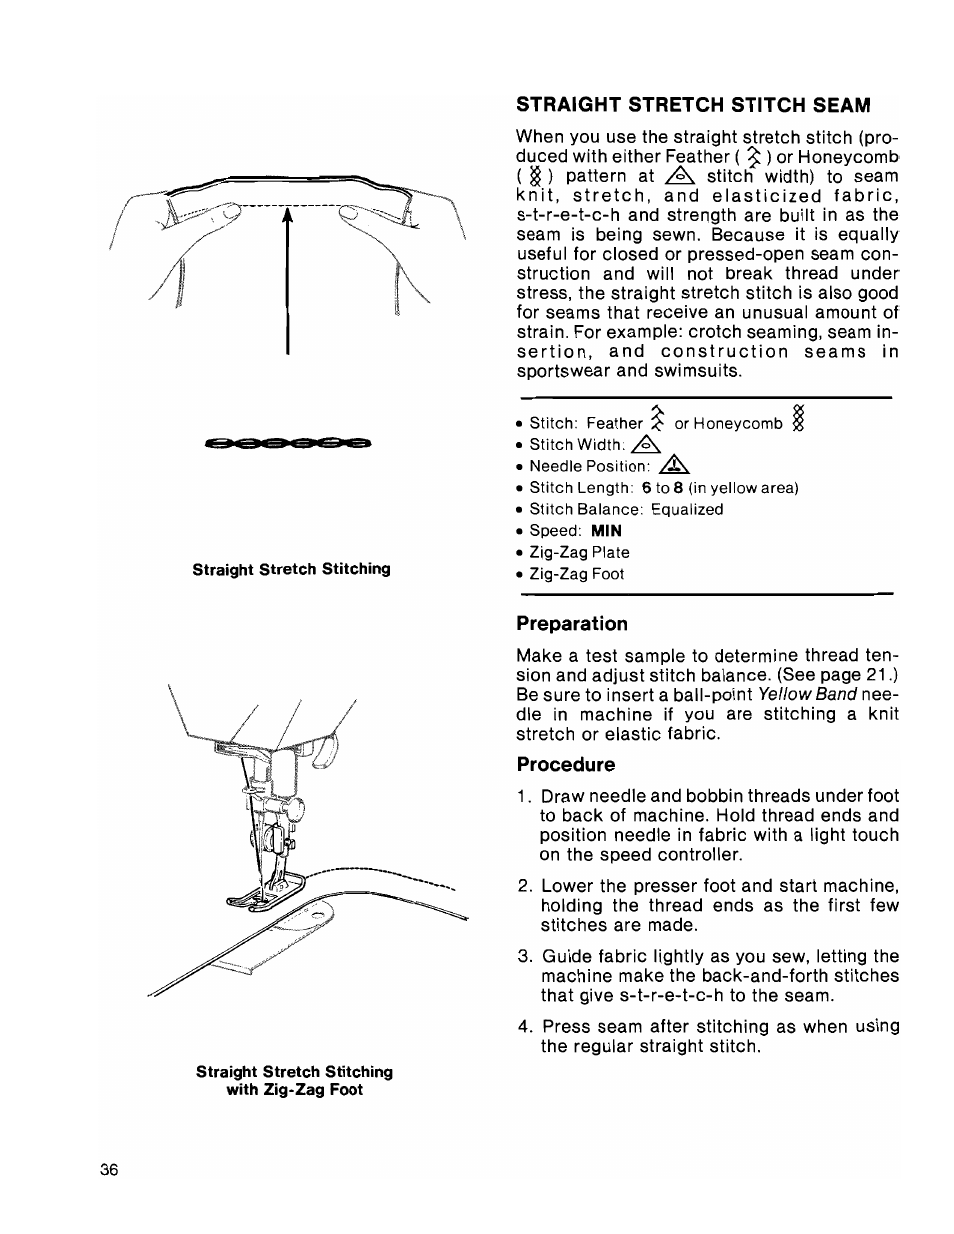 Straight stretch stitch seam, Preparation, Procedure | SINGER 1036 Creative Touch User Manual | Page 41 / 66